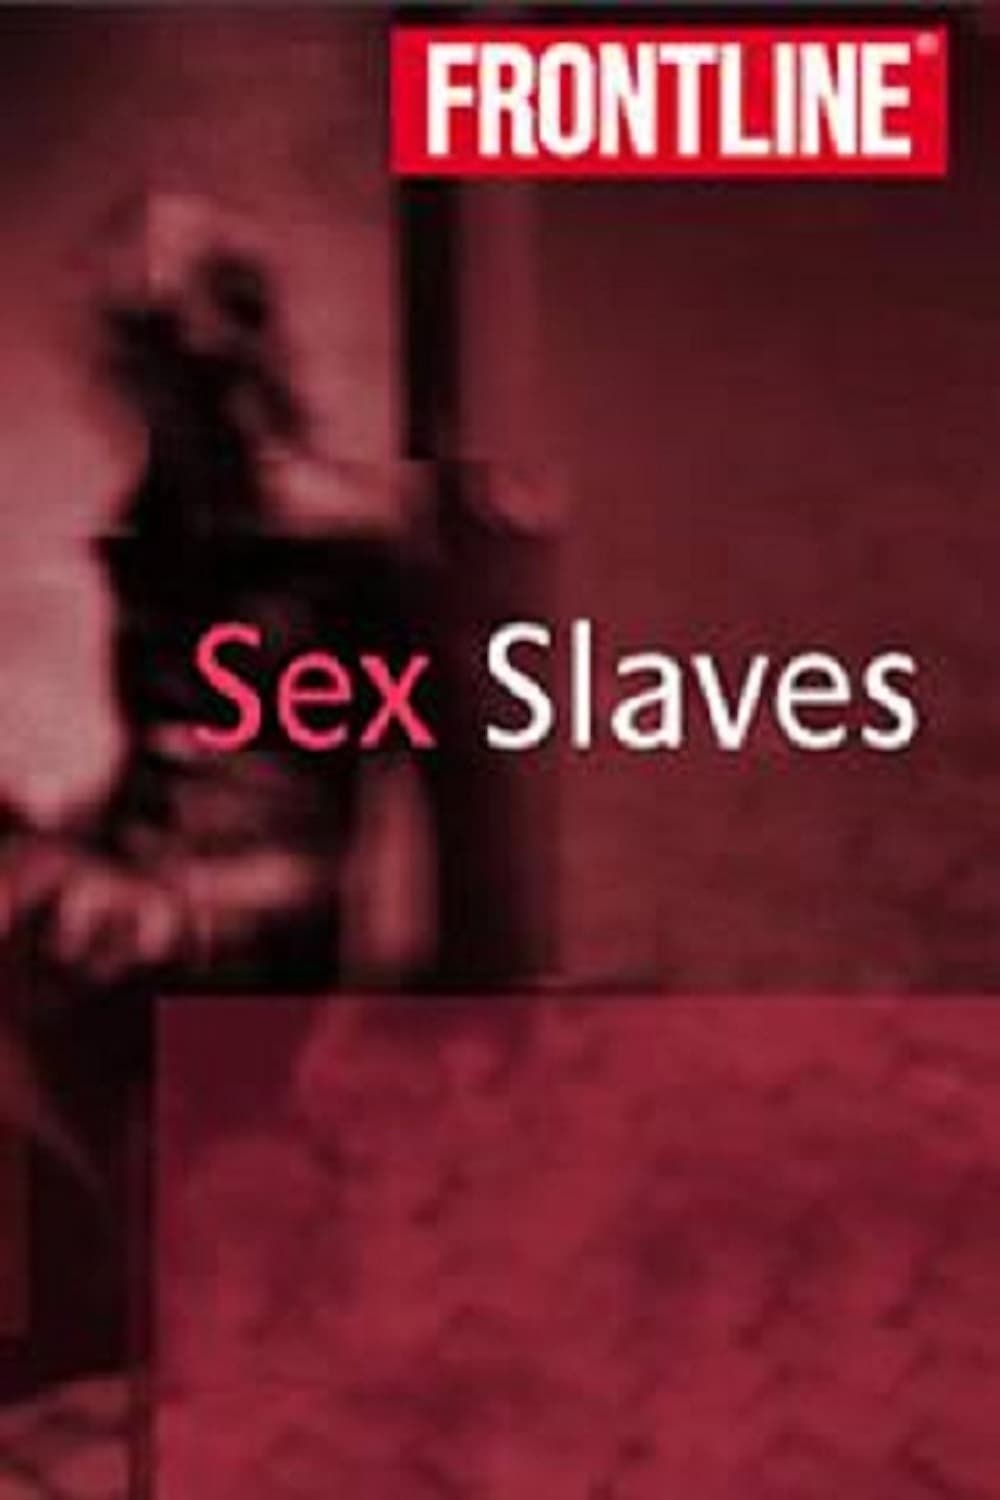 Sex Slaves Frontline (2006)